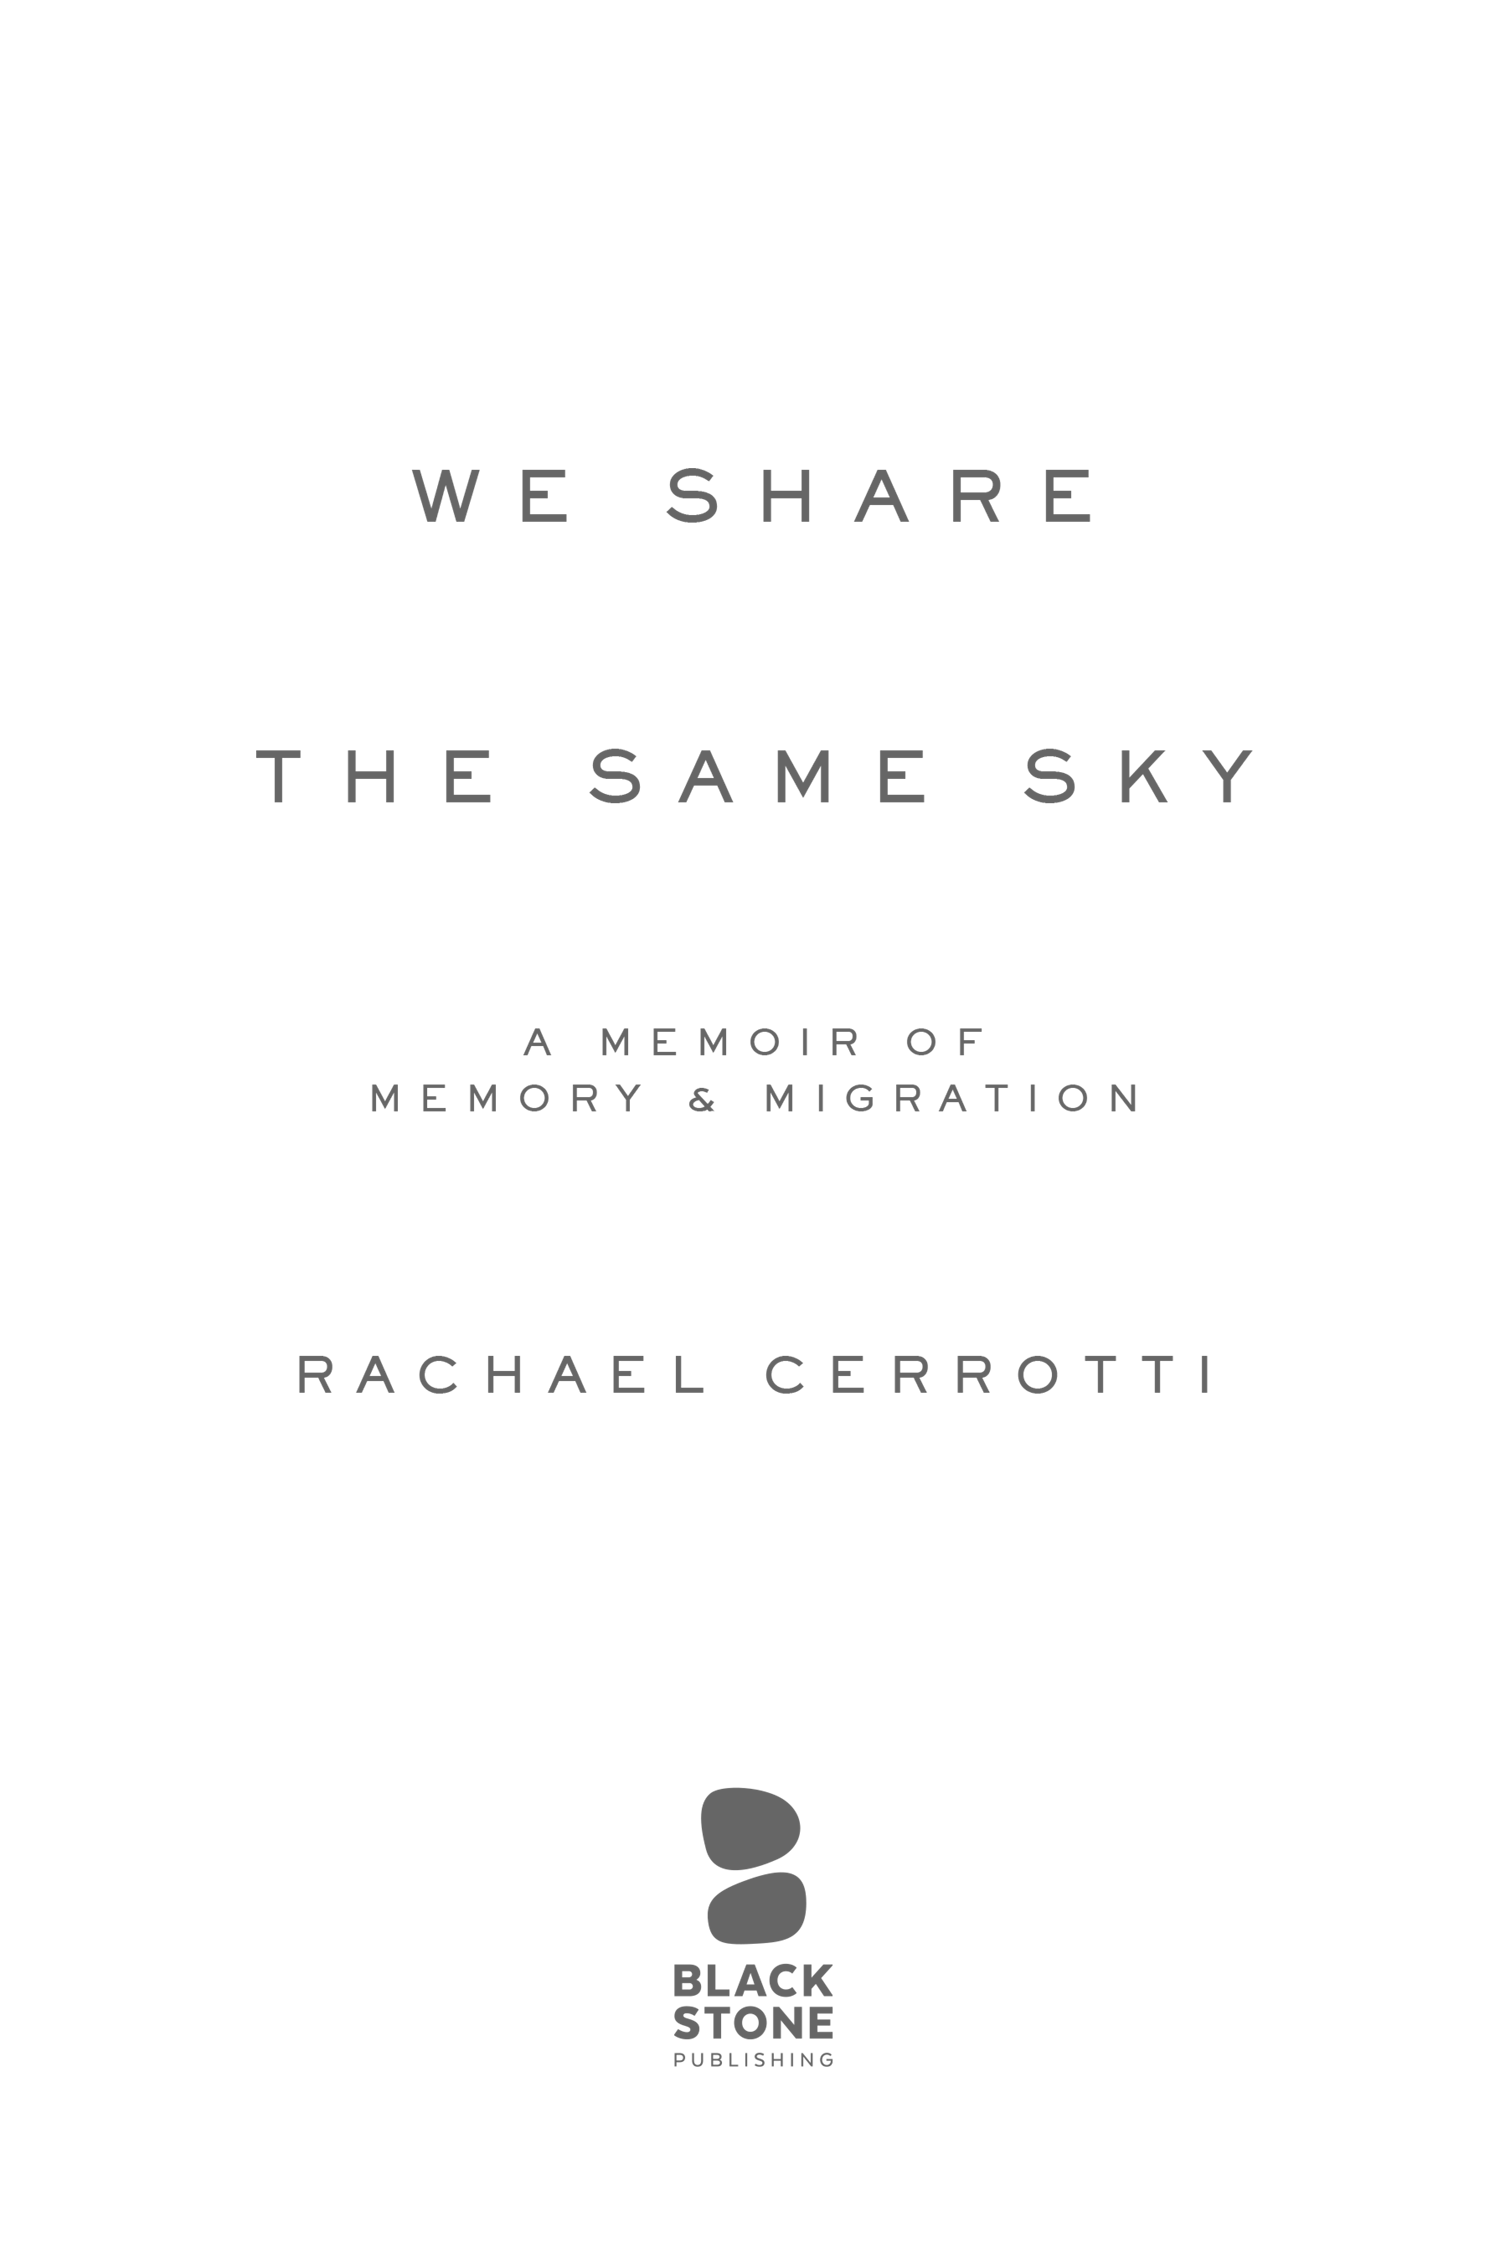 We Share the Same Sky - A Memoir of Memory and Migration - photo 2